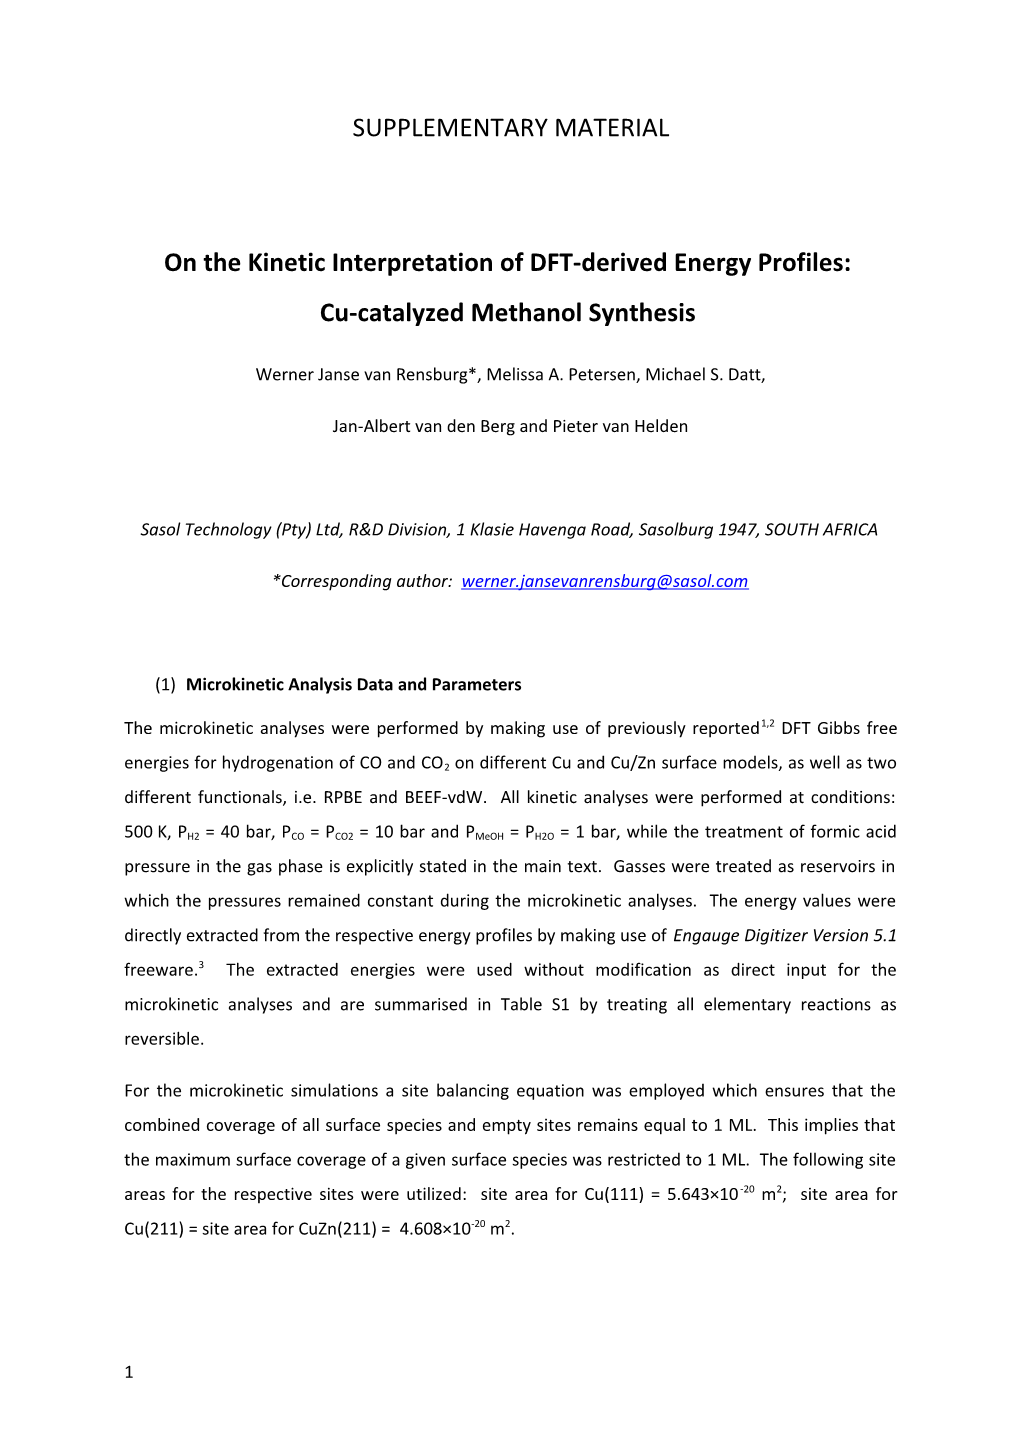 On the Kinetic Interpretation of DFT-Derived Energy Profiles